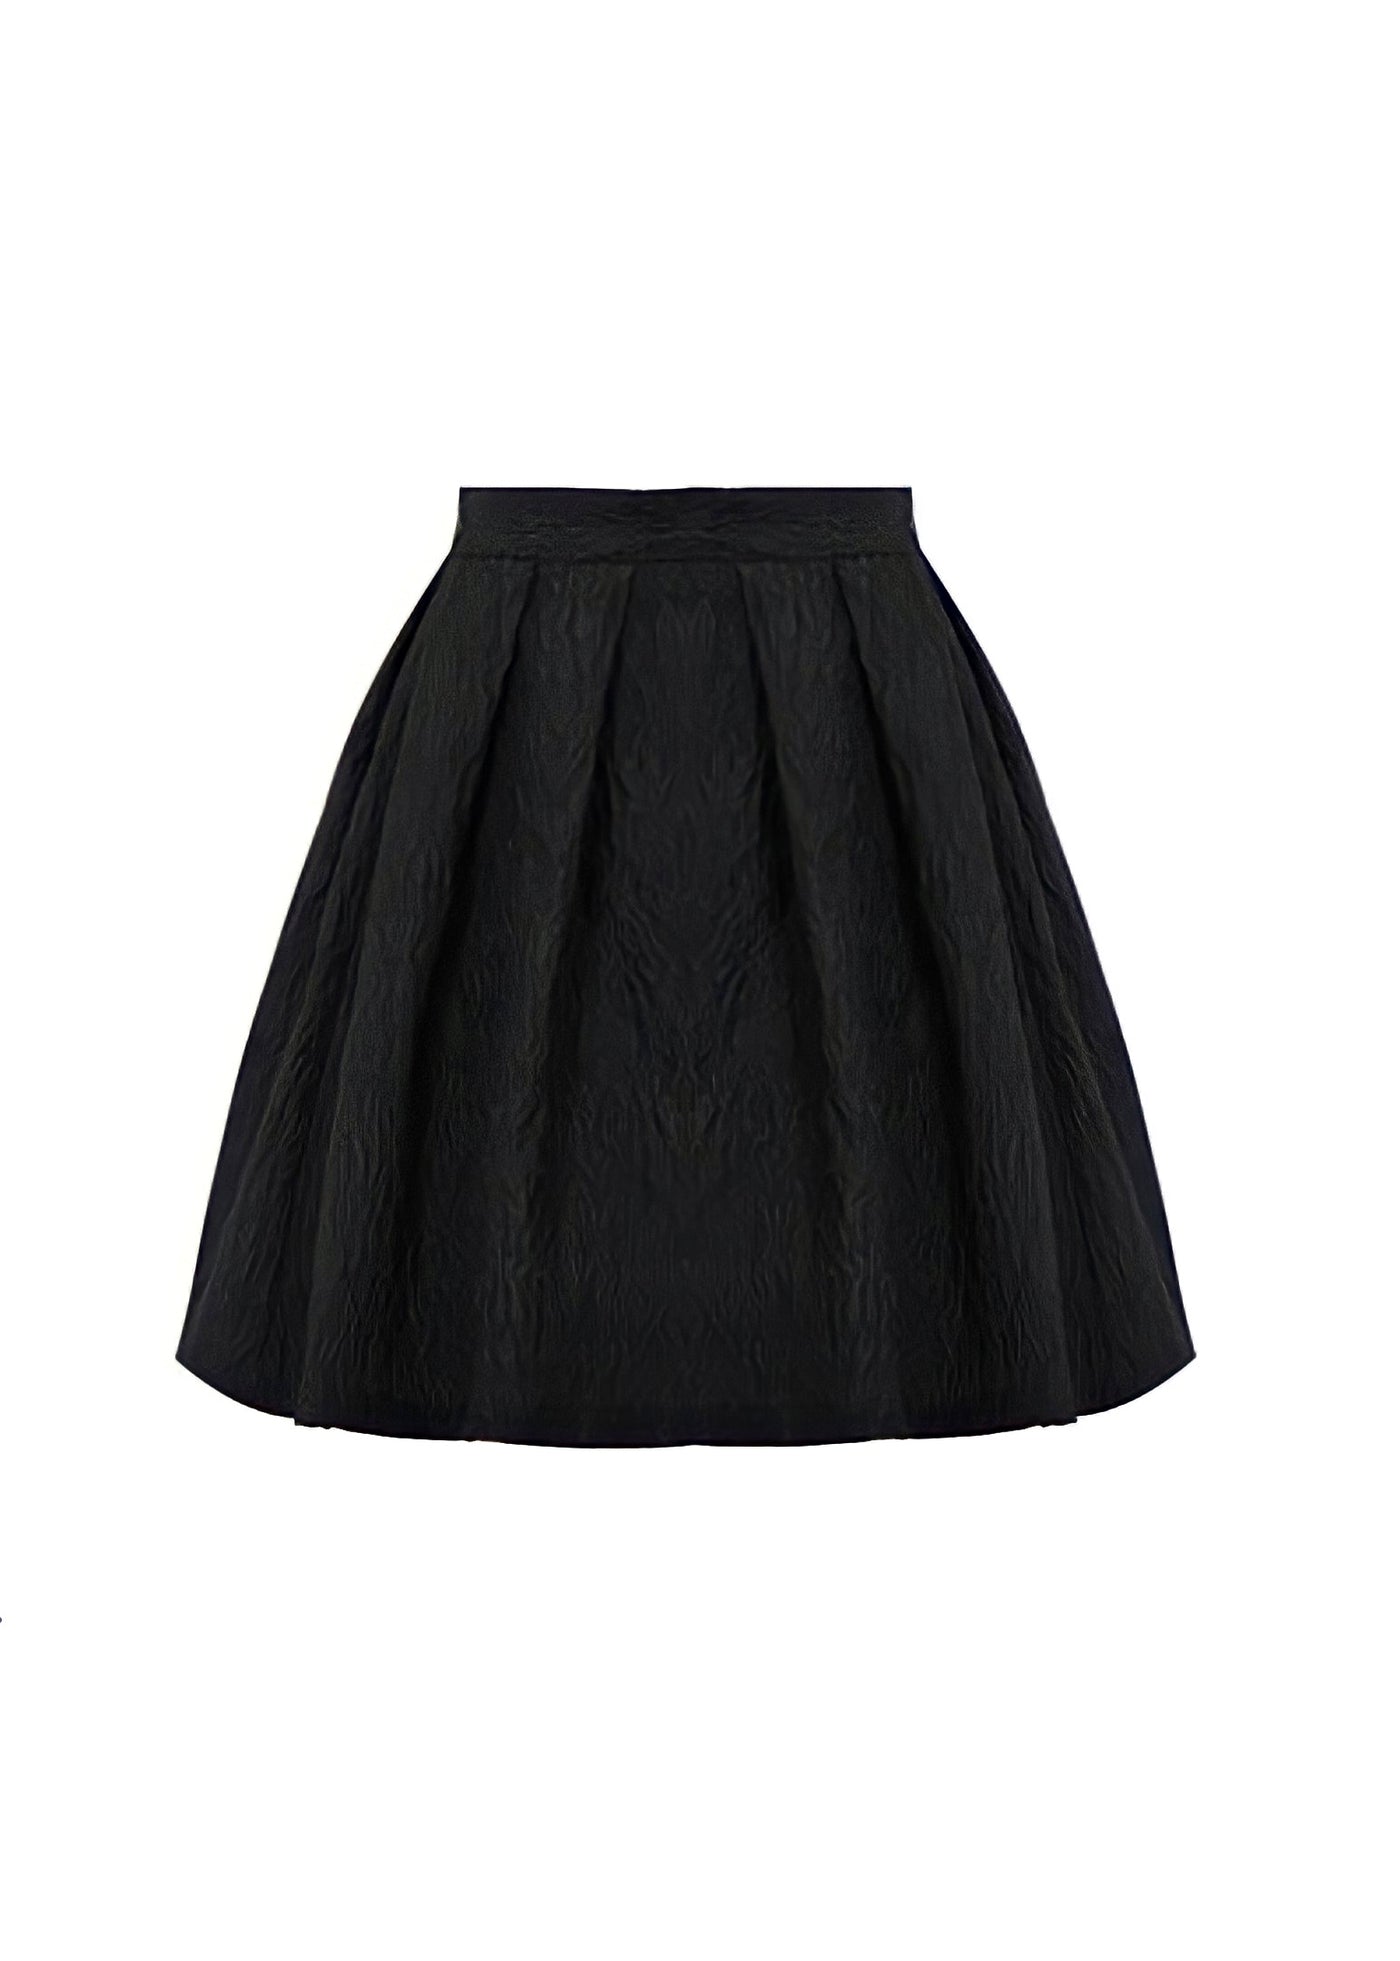 n.frame バルーンジャガードミニスカートスカート